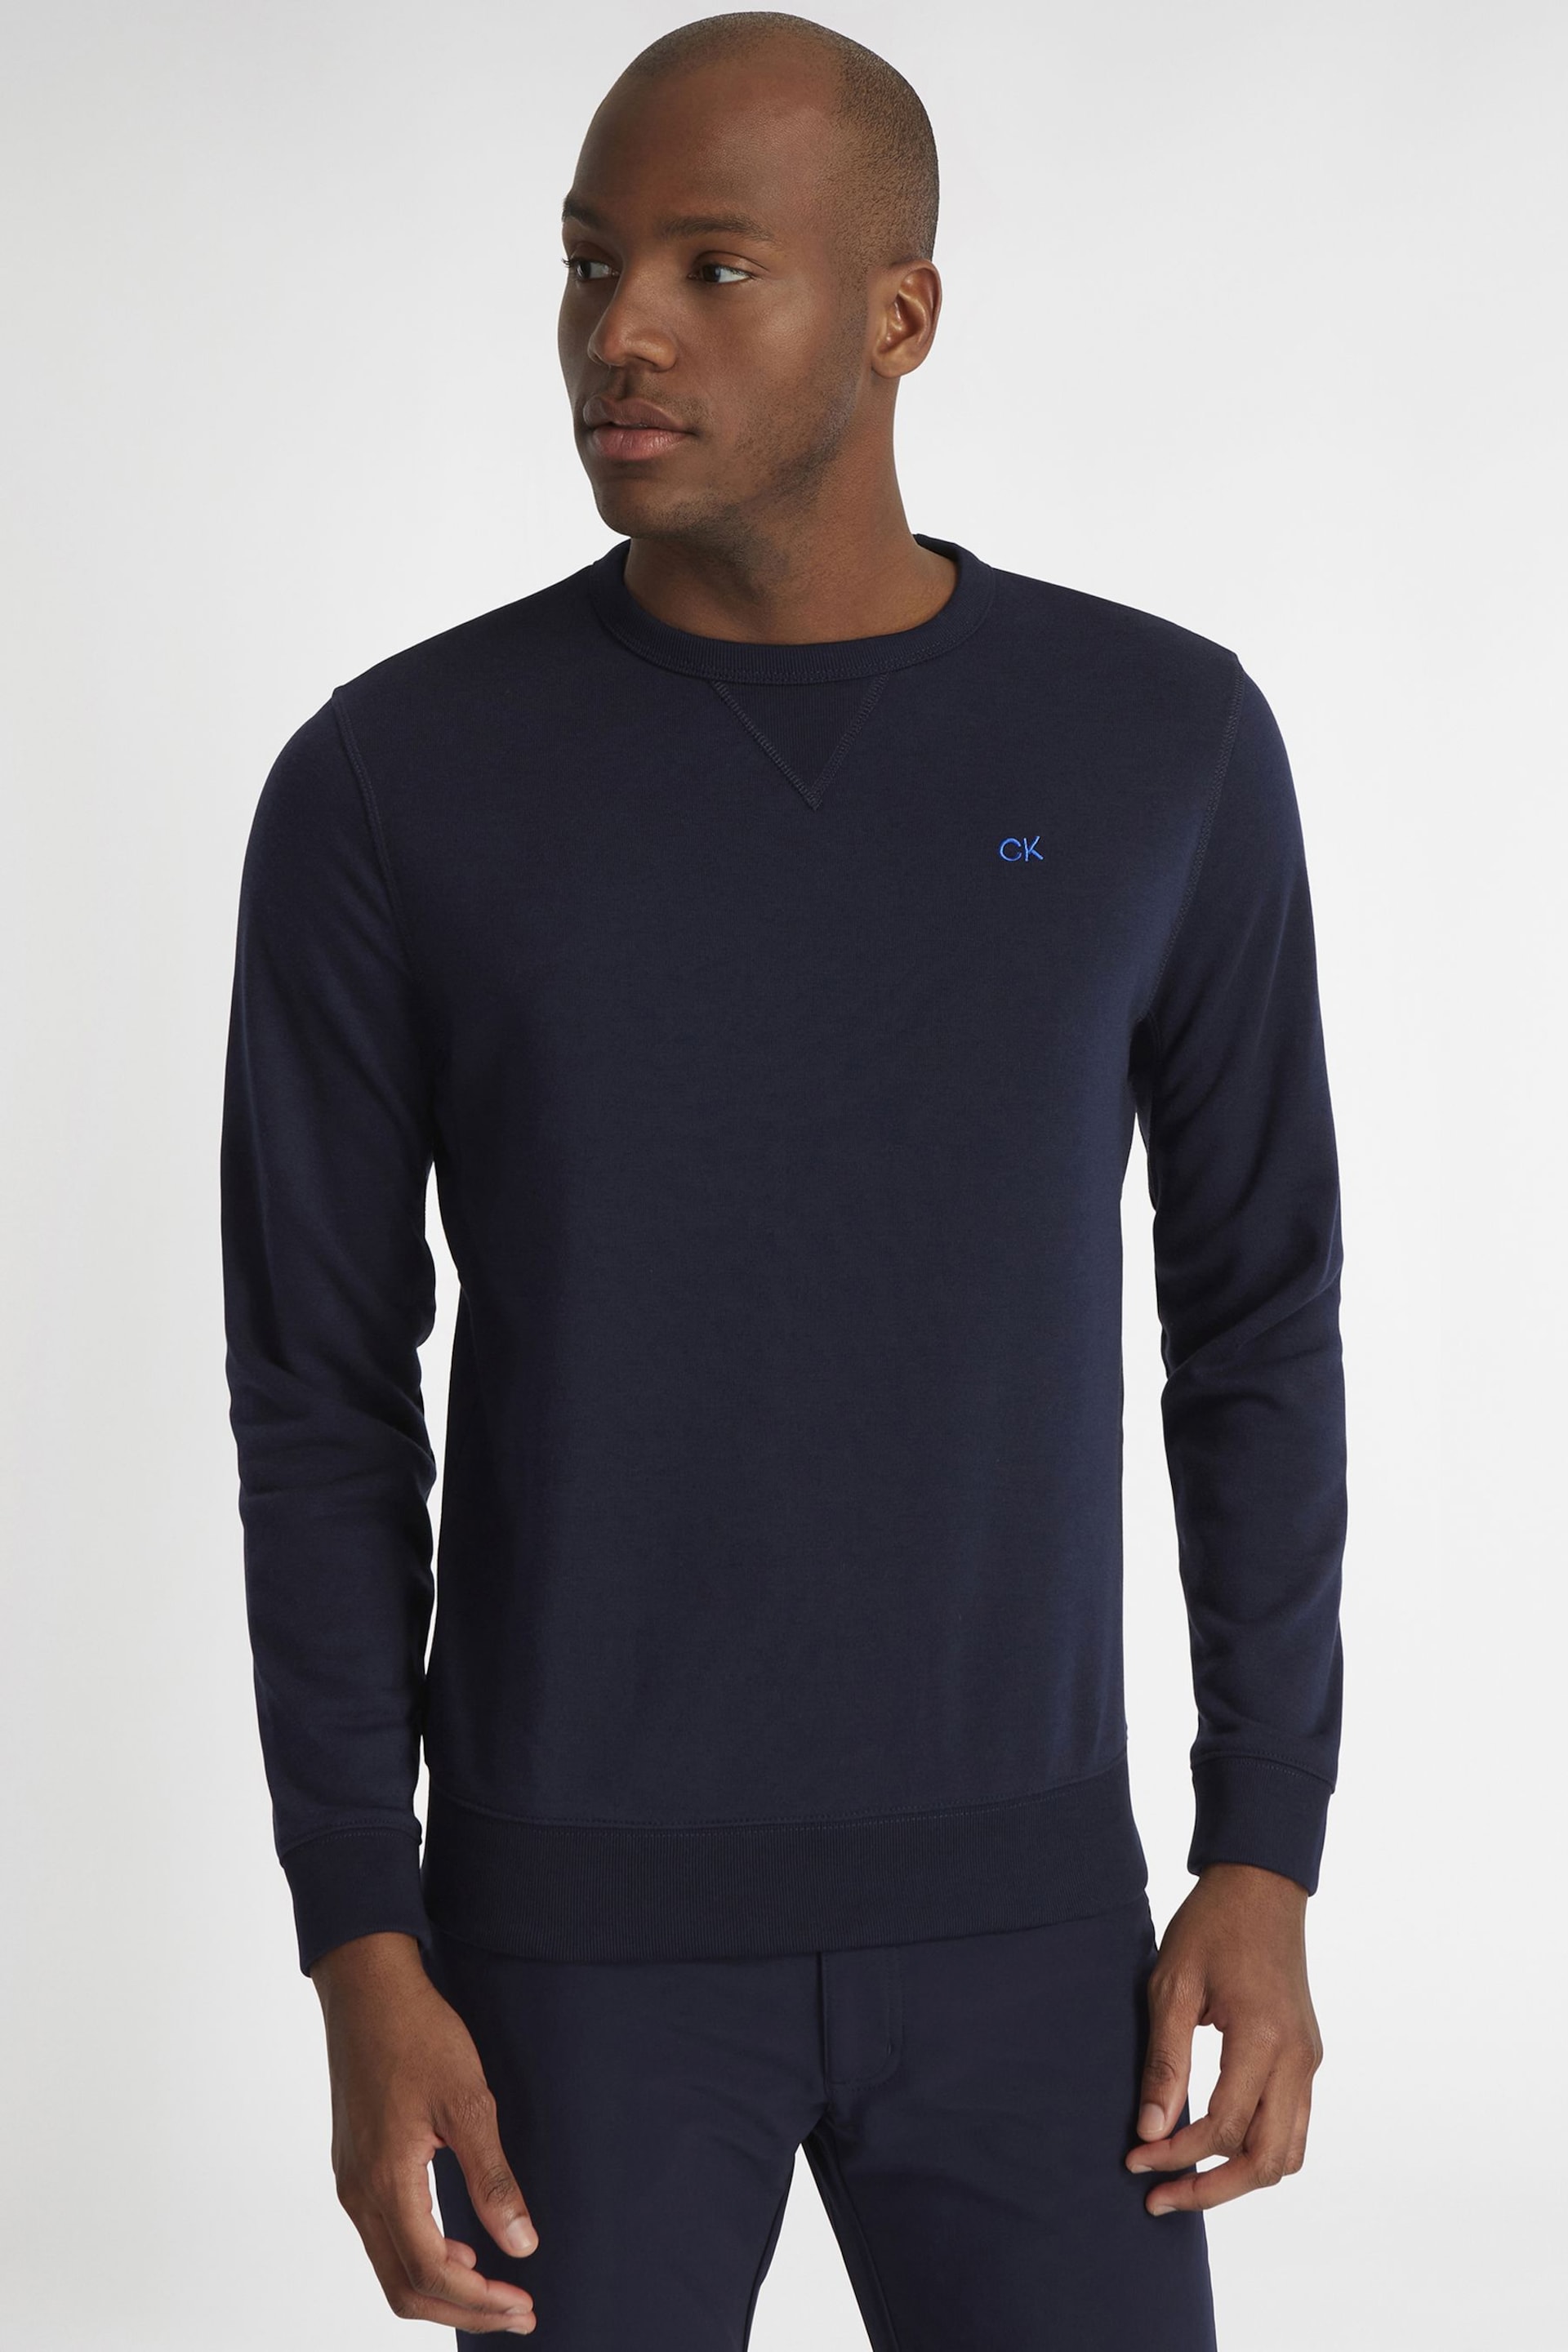 Calvin Klein Golf Blue Ohio Sweatshirt - Image 1 of 8